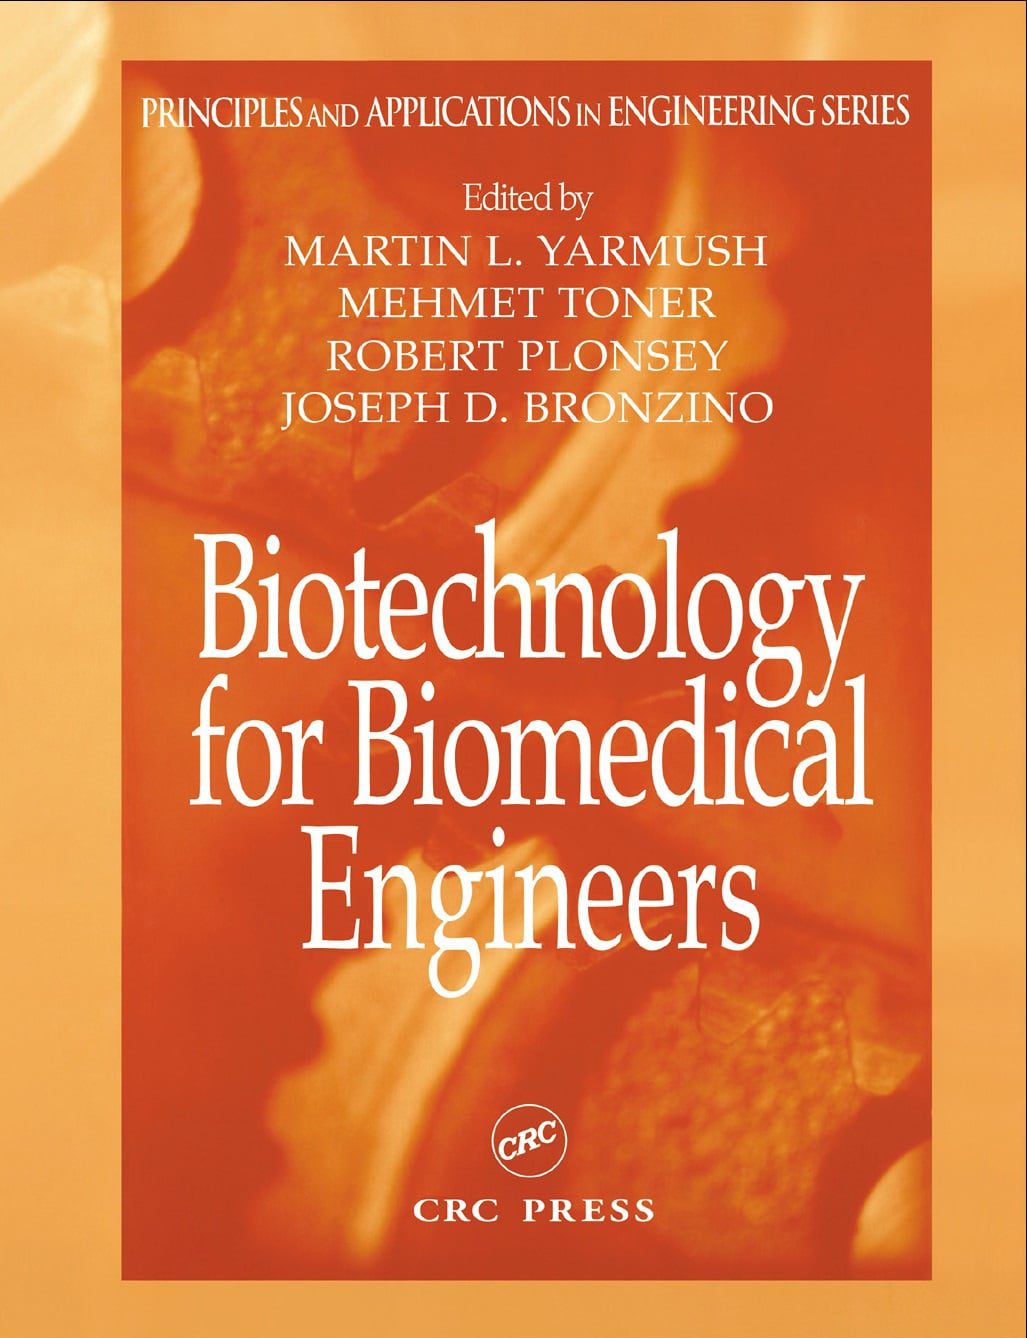 Biotechnology for Biomedical Engineers - Martin L. Yarmush - 1st Edition